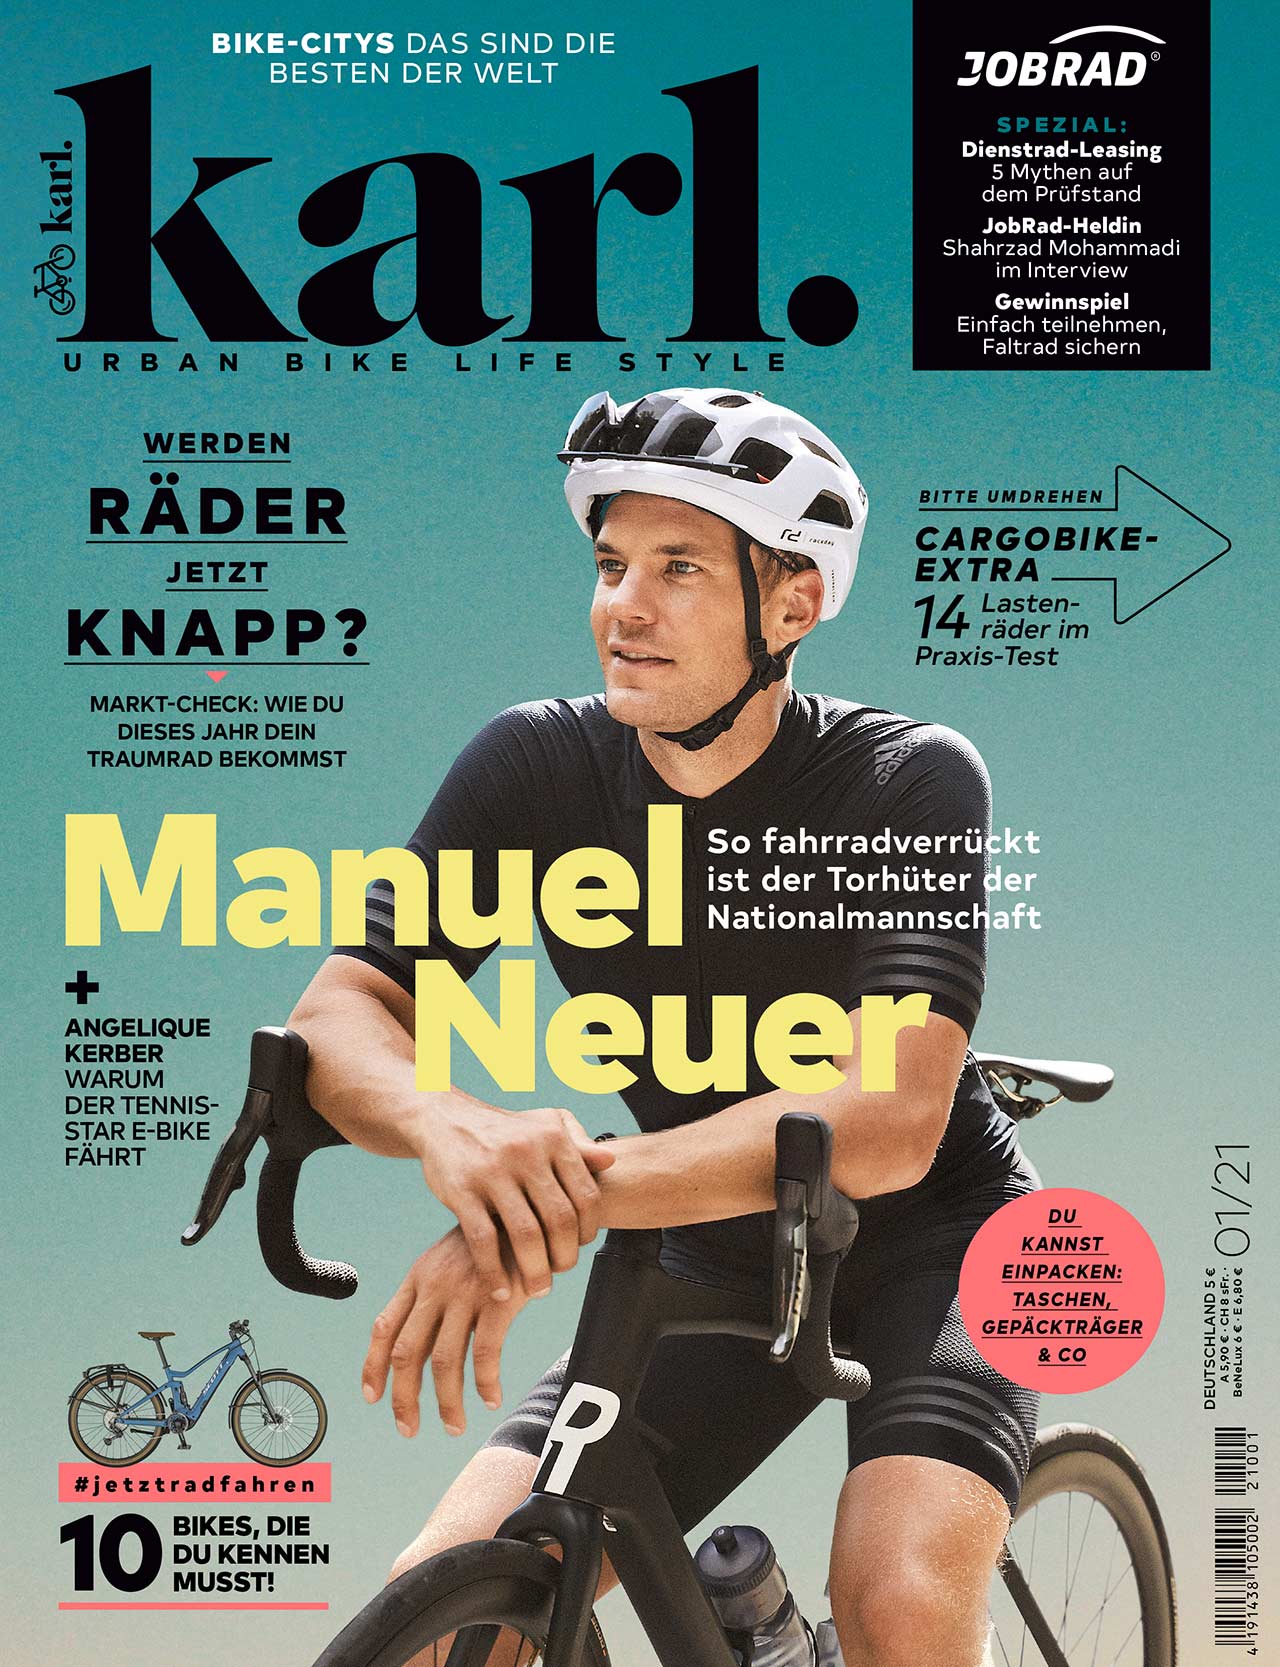 Fahrradmagazin KARL mit JobRad-Spezial!